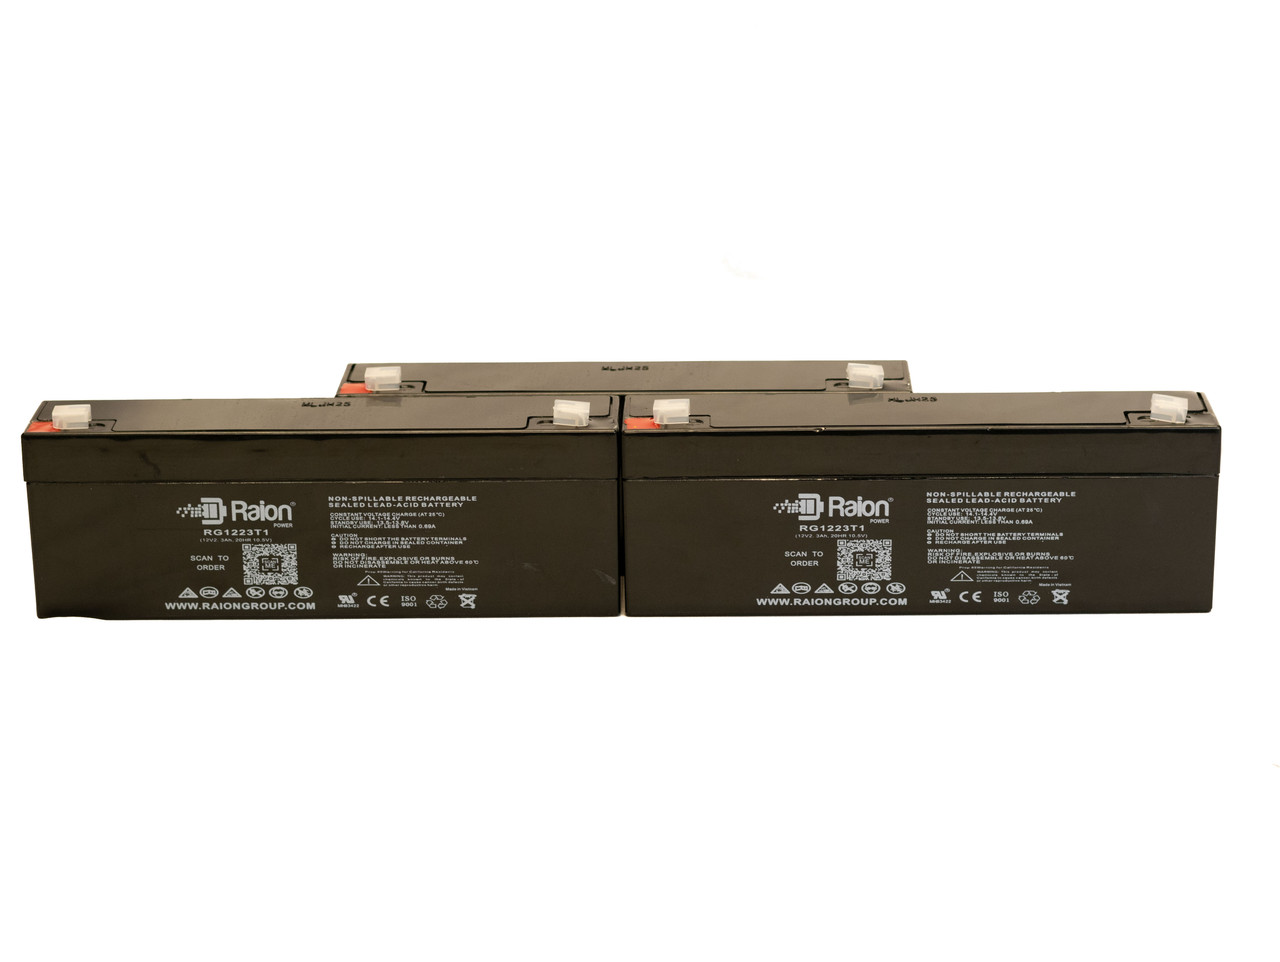 Raion Power 12V 2.3Ah RG1223T1 Replacement Medical Battery for Picker International Pulsar 4 Defibrillator - 3 Pack